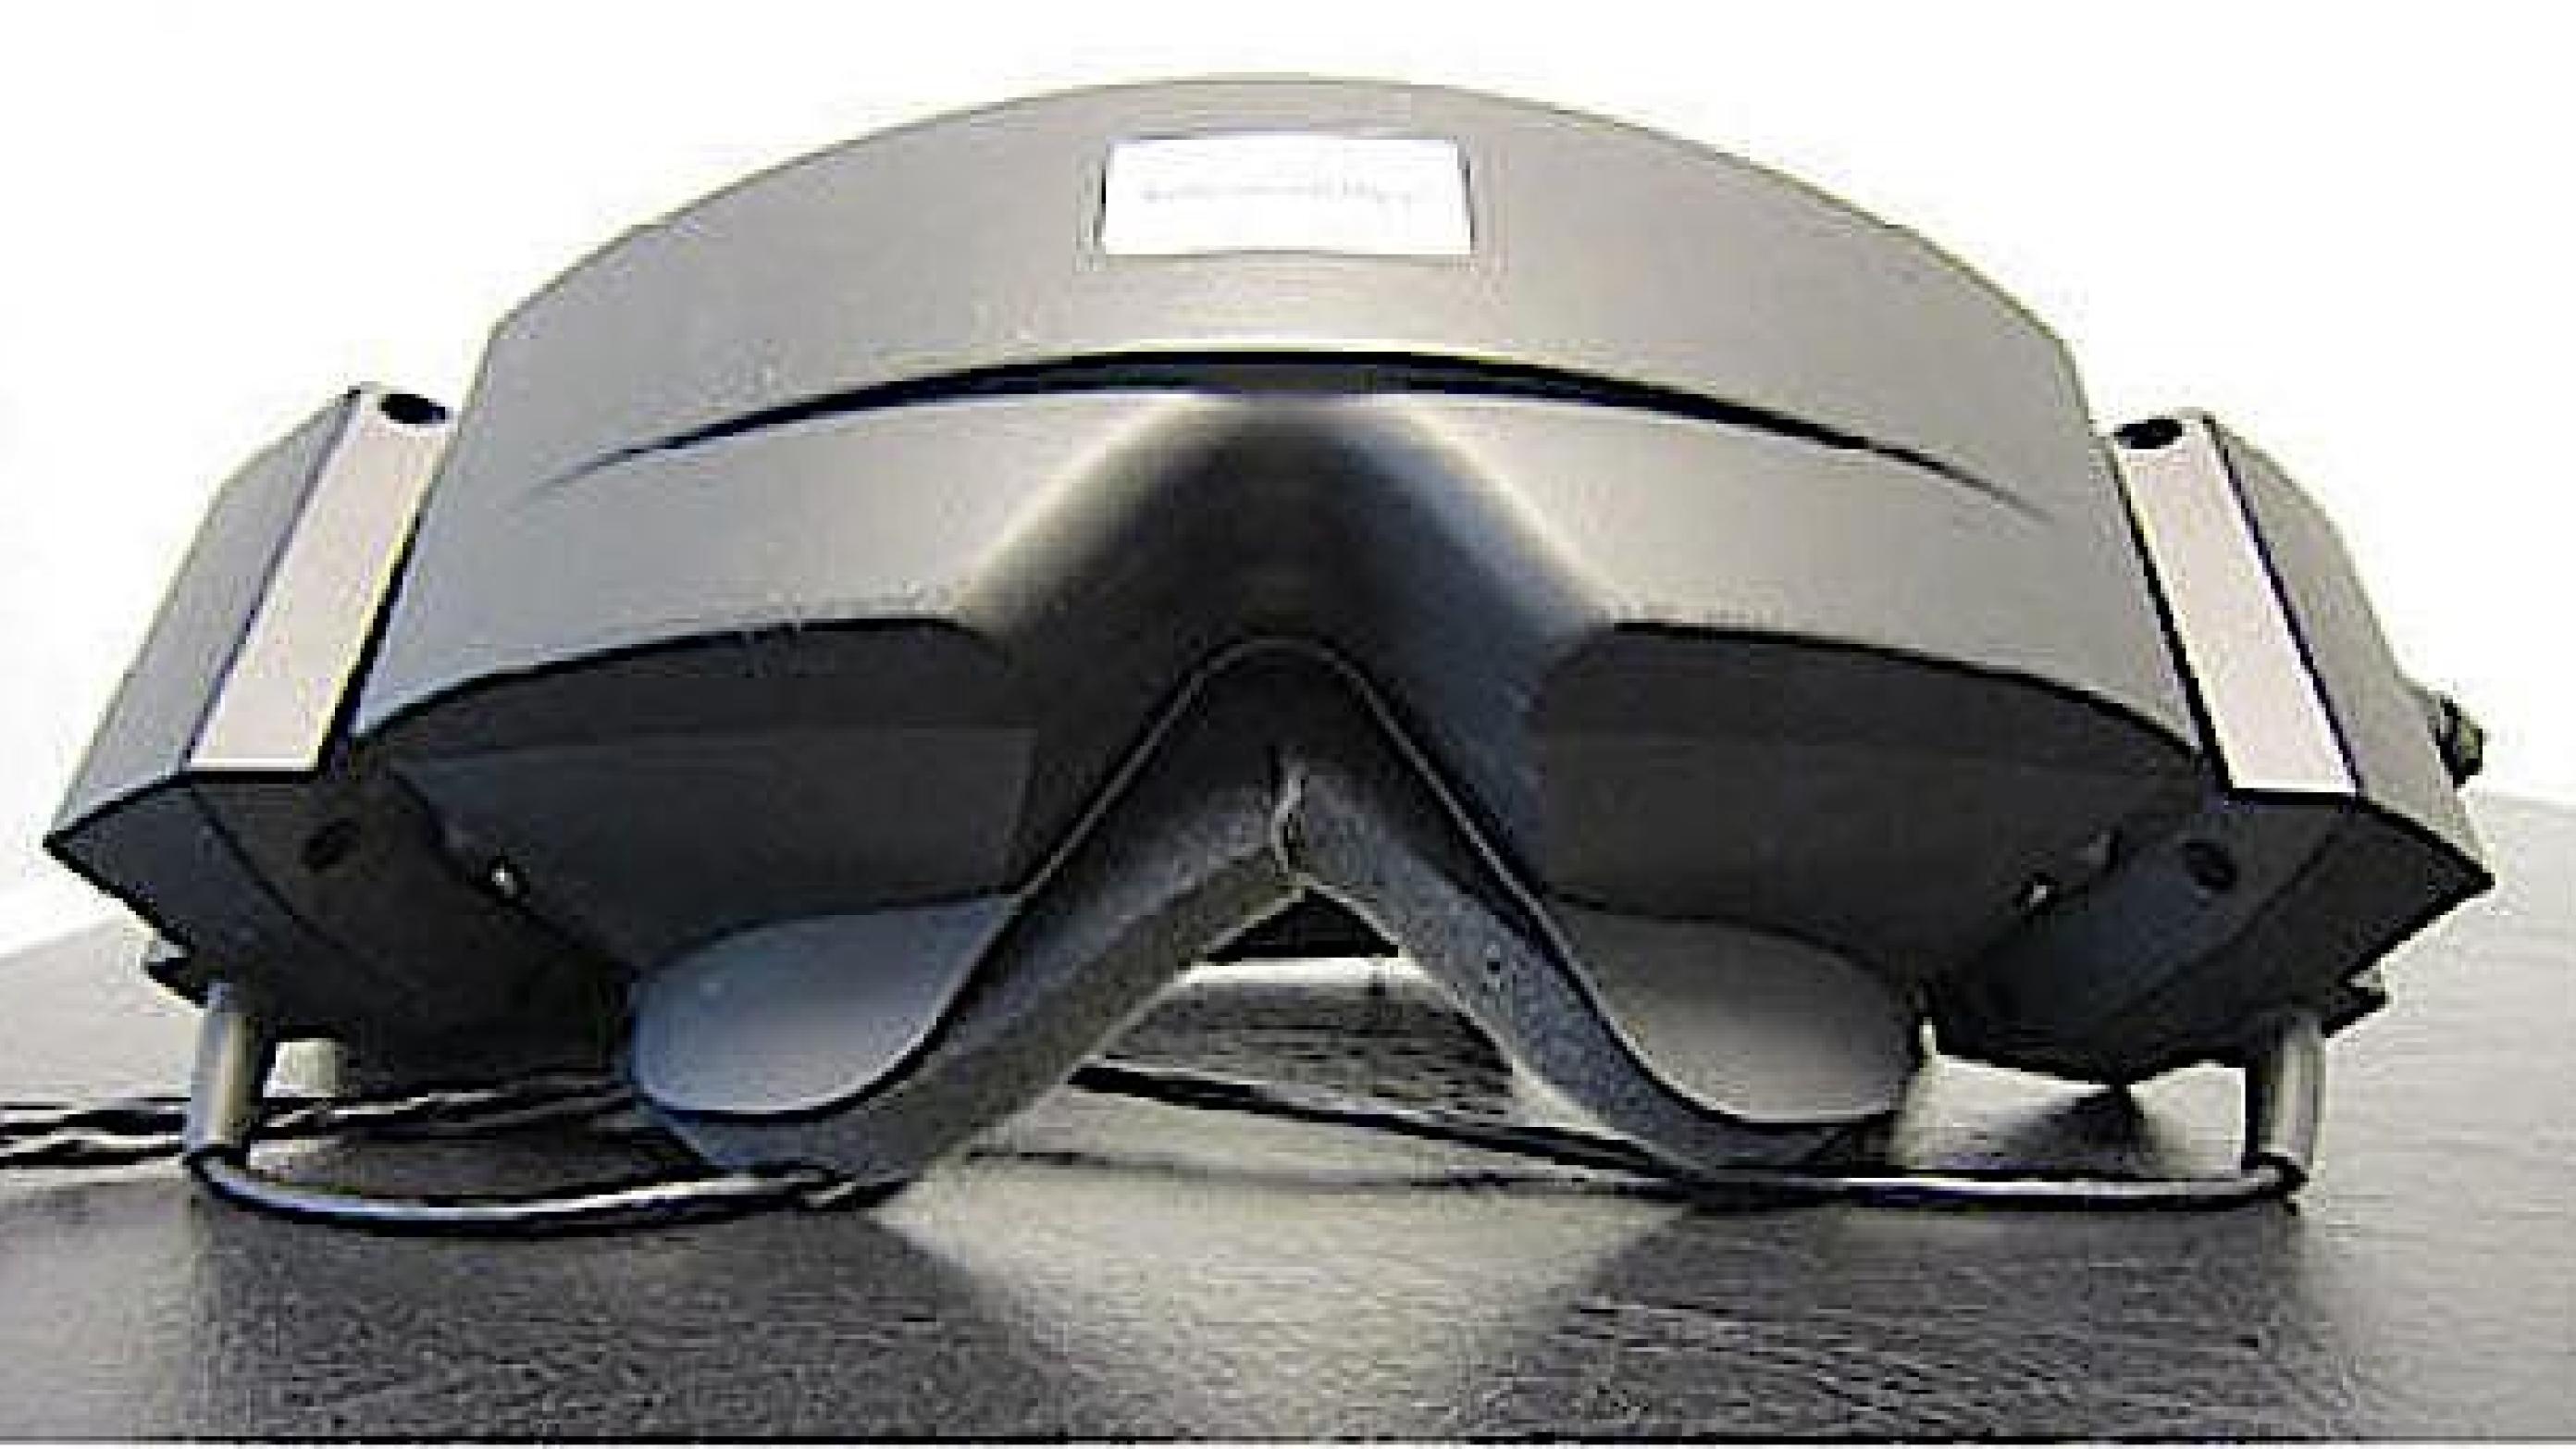 Video-nystagmografibrillen måler nystagmus gennem et infrarødkamera.